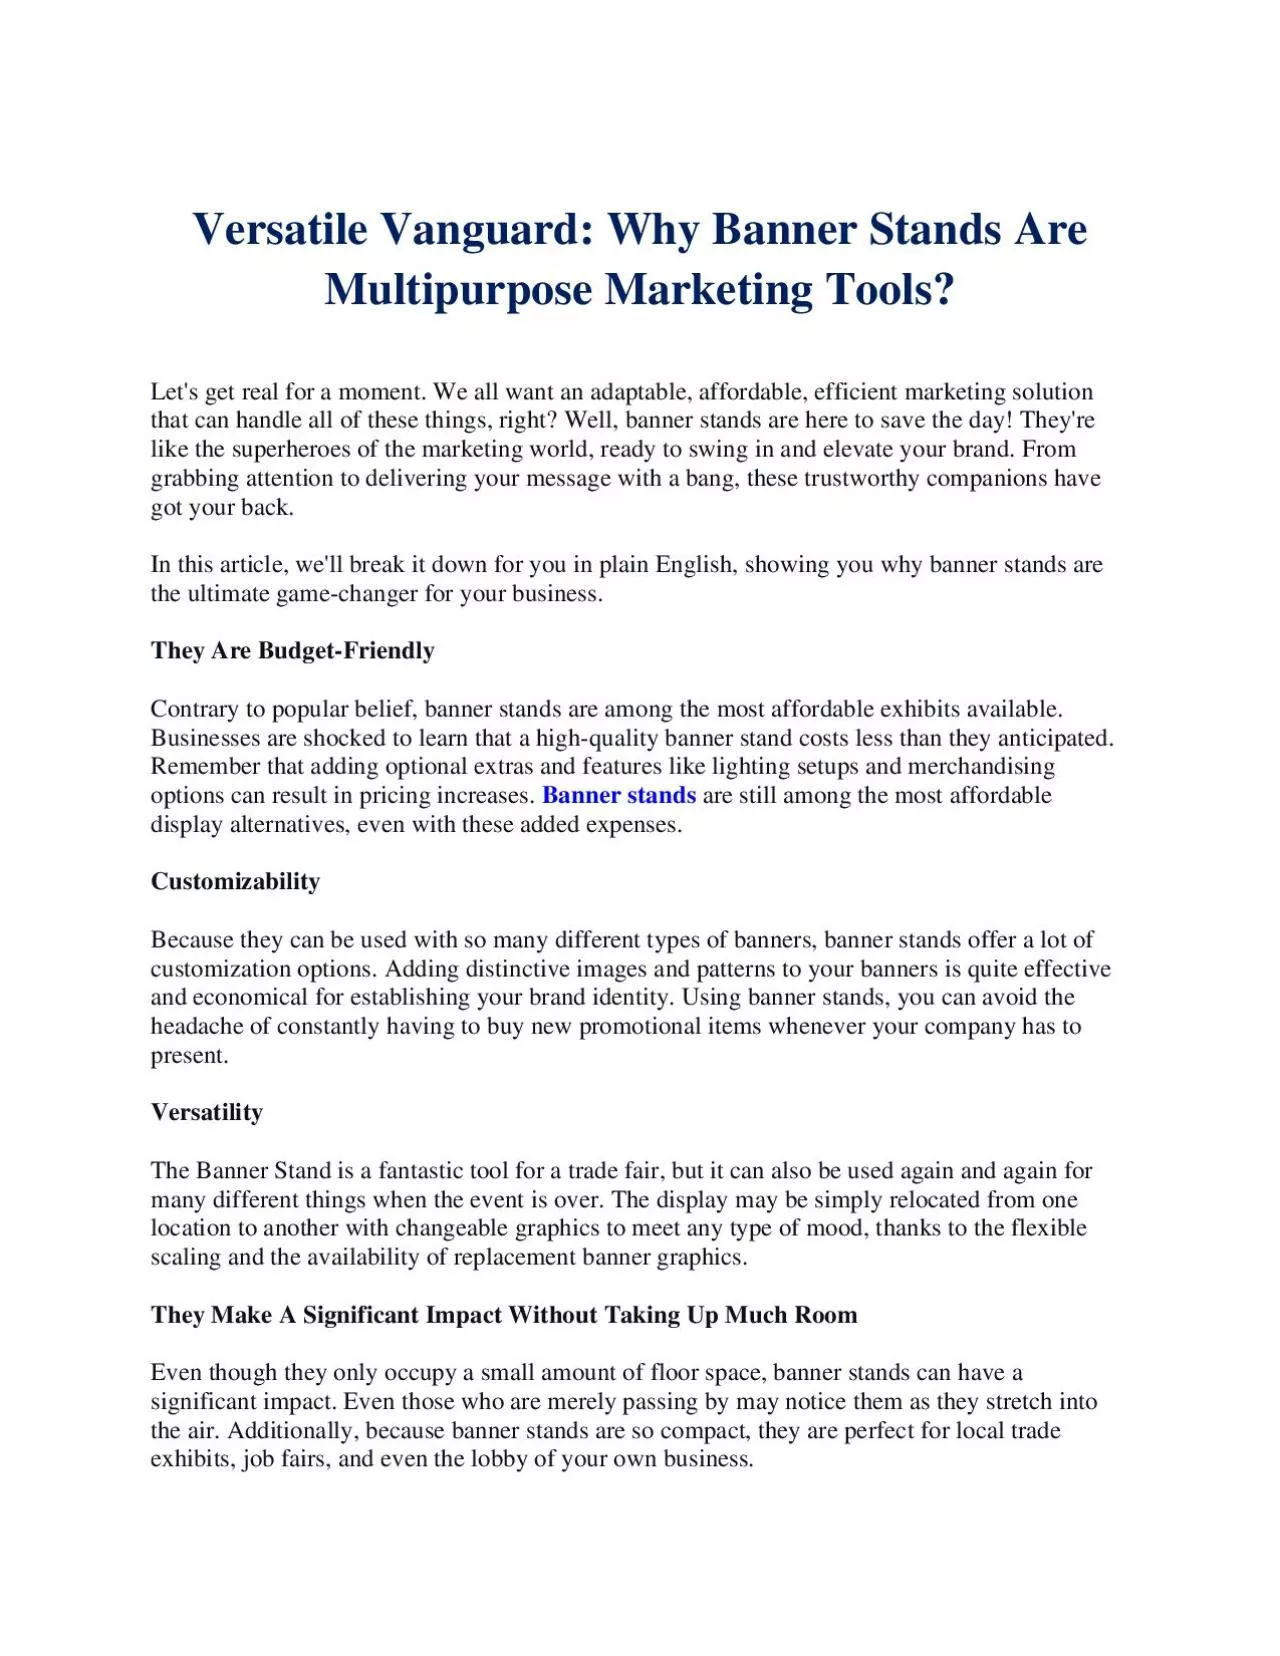 Versatile Vanguard: Why Banner Stands Are Multipurpose Marketing Tools?